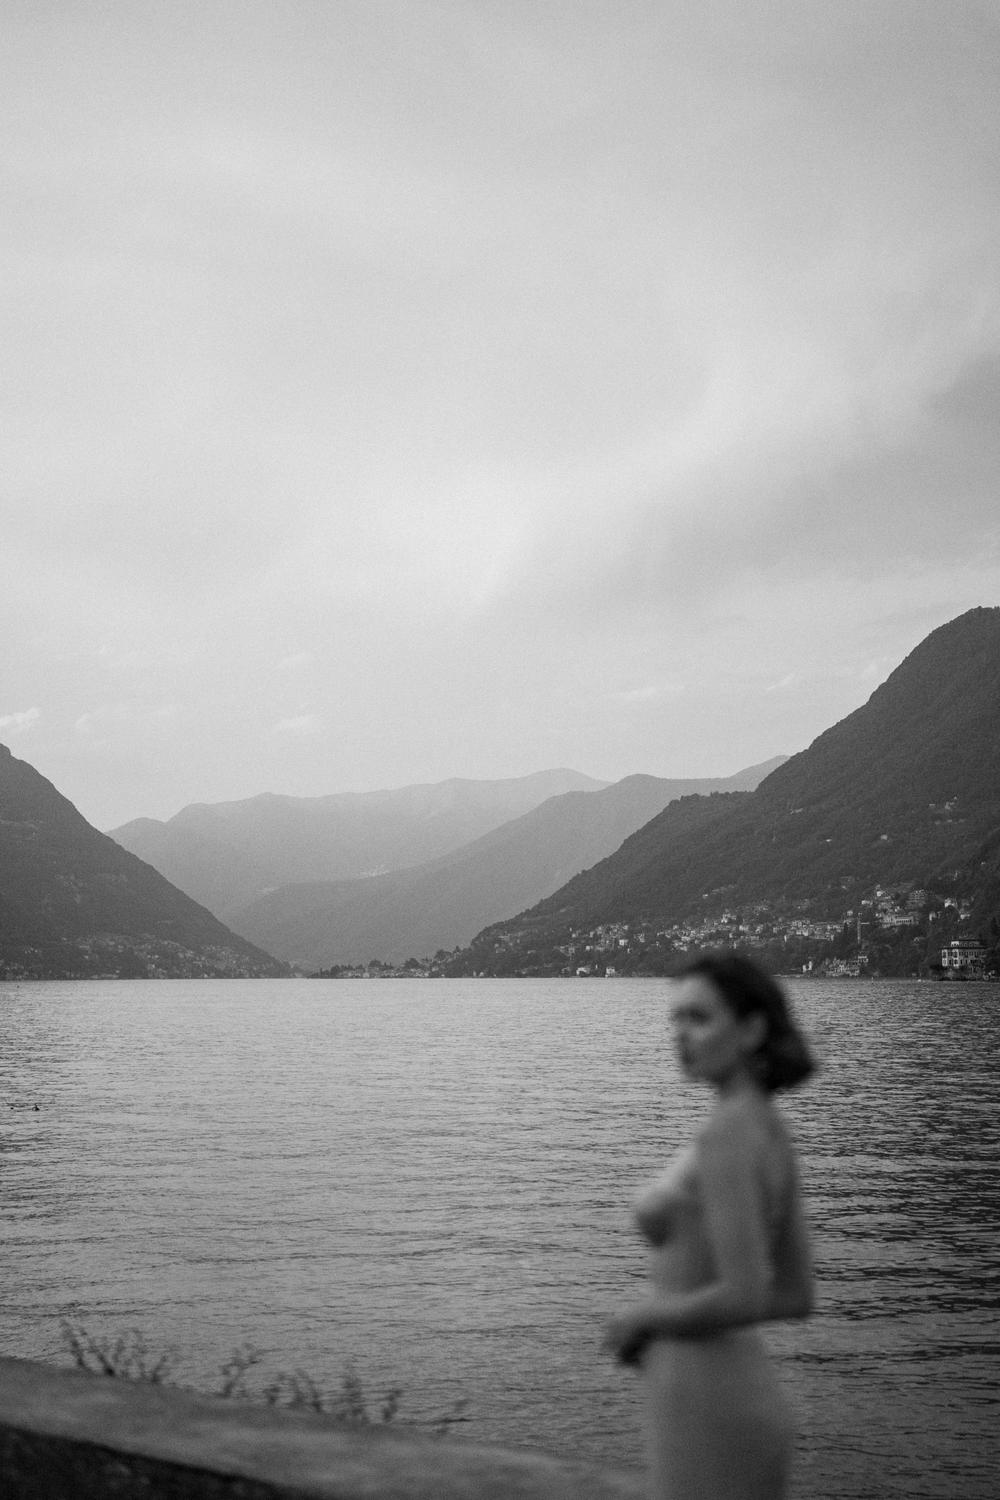 Lake Como portrait session. Mariia